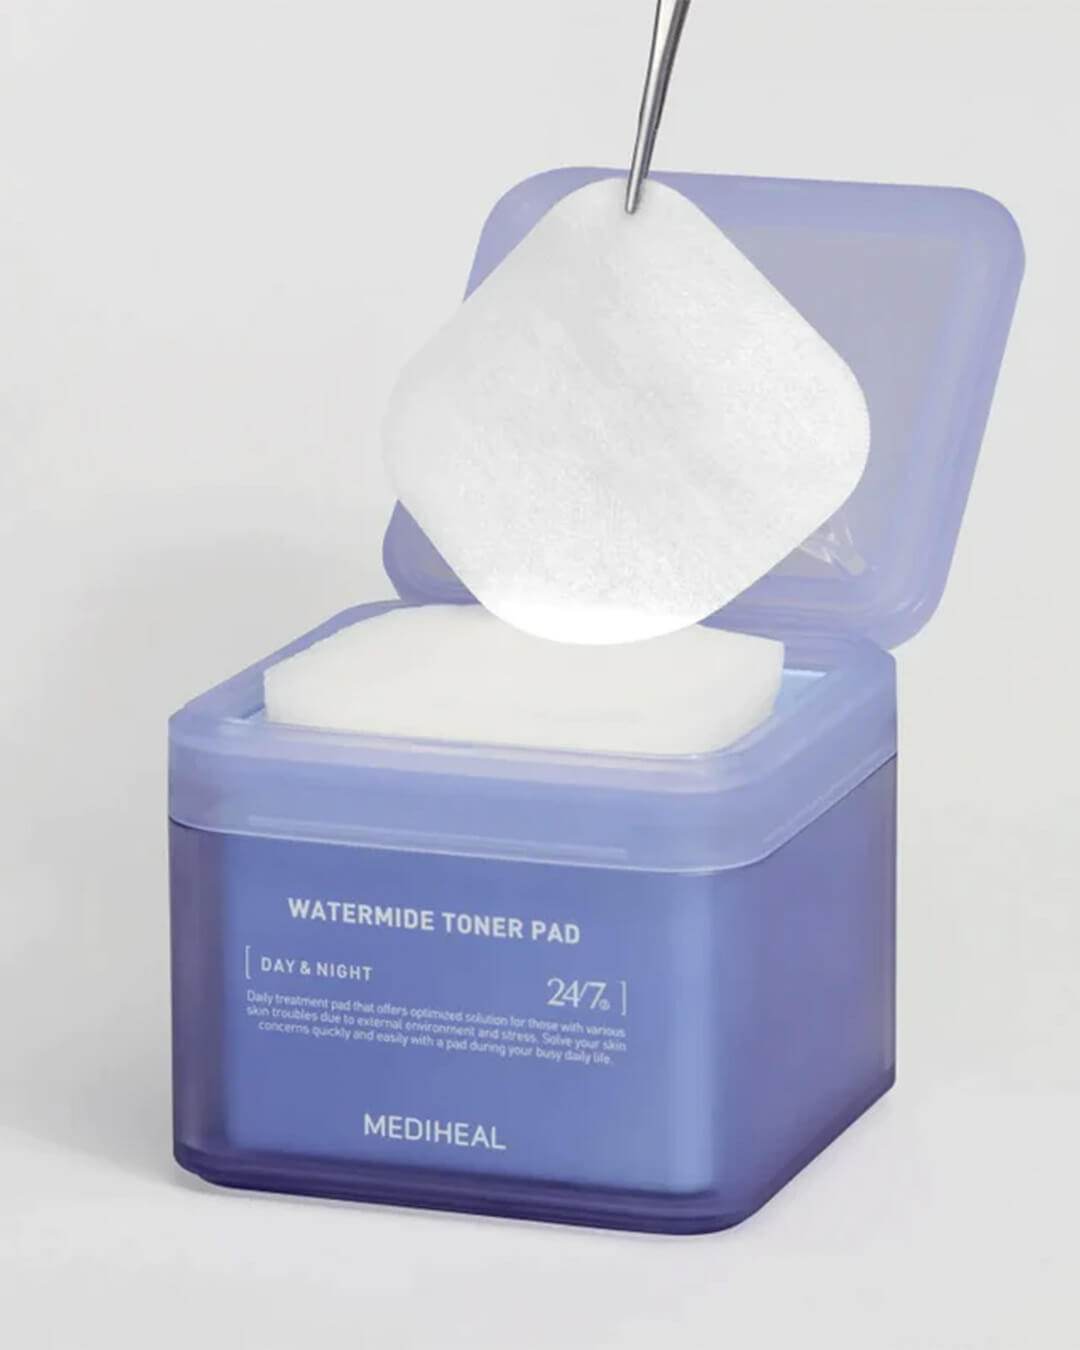 Mediheal Watermide Toner Pad, 100 Pads, 5.74 fl oz (170 ml)